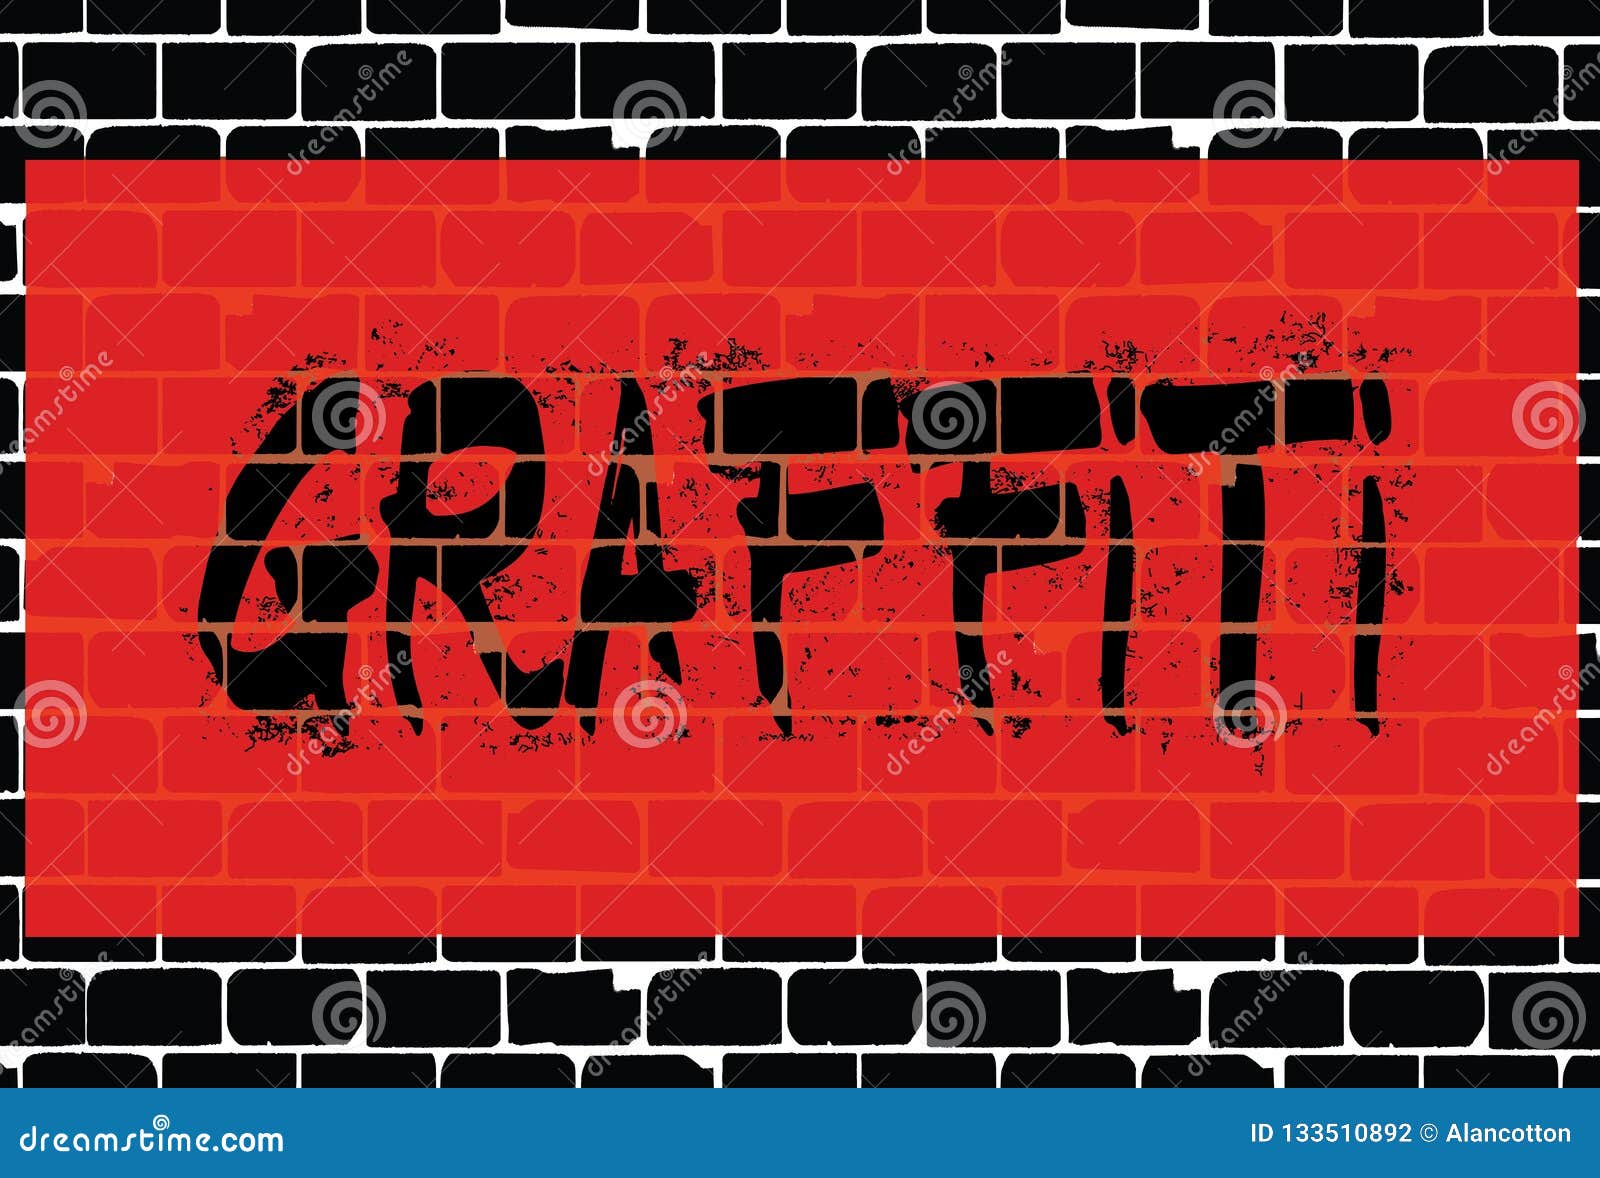 Graffiti on Black Brick Wall Stock Vector - Illustration of wall, paint ...